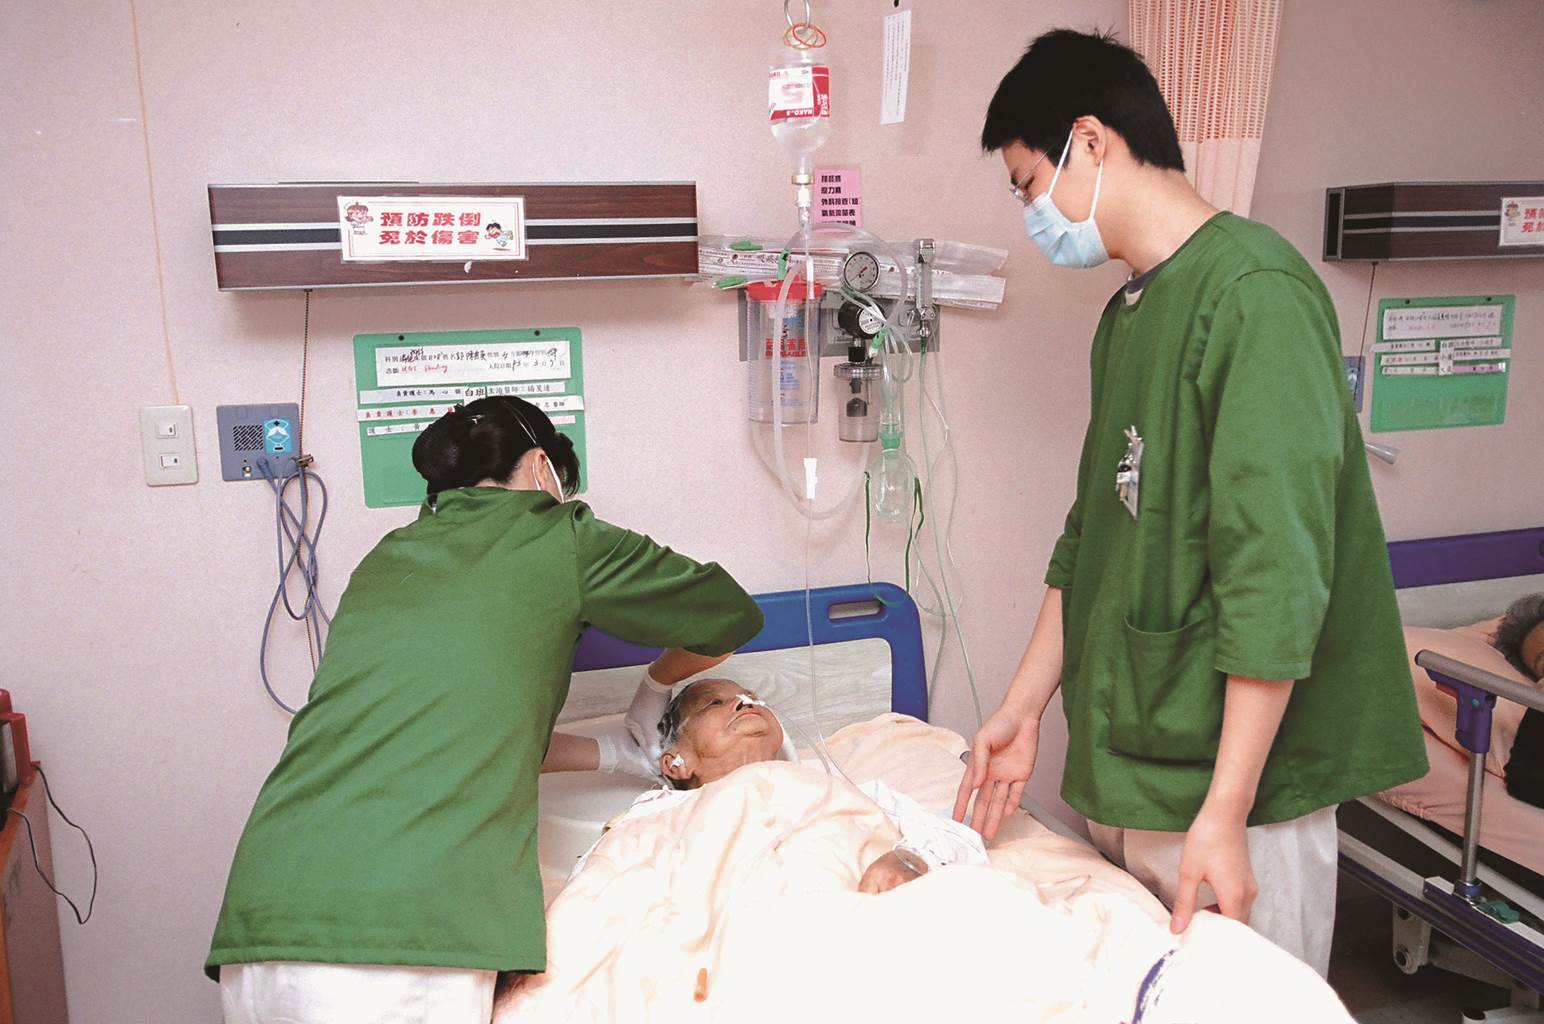 Hospital Ward Para-nurses Help Taking Care of Patients, 2003